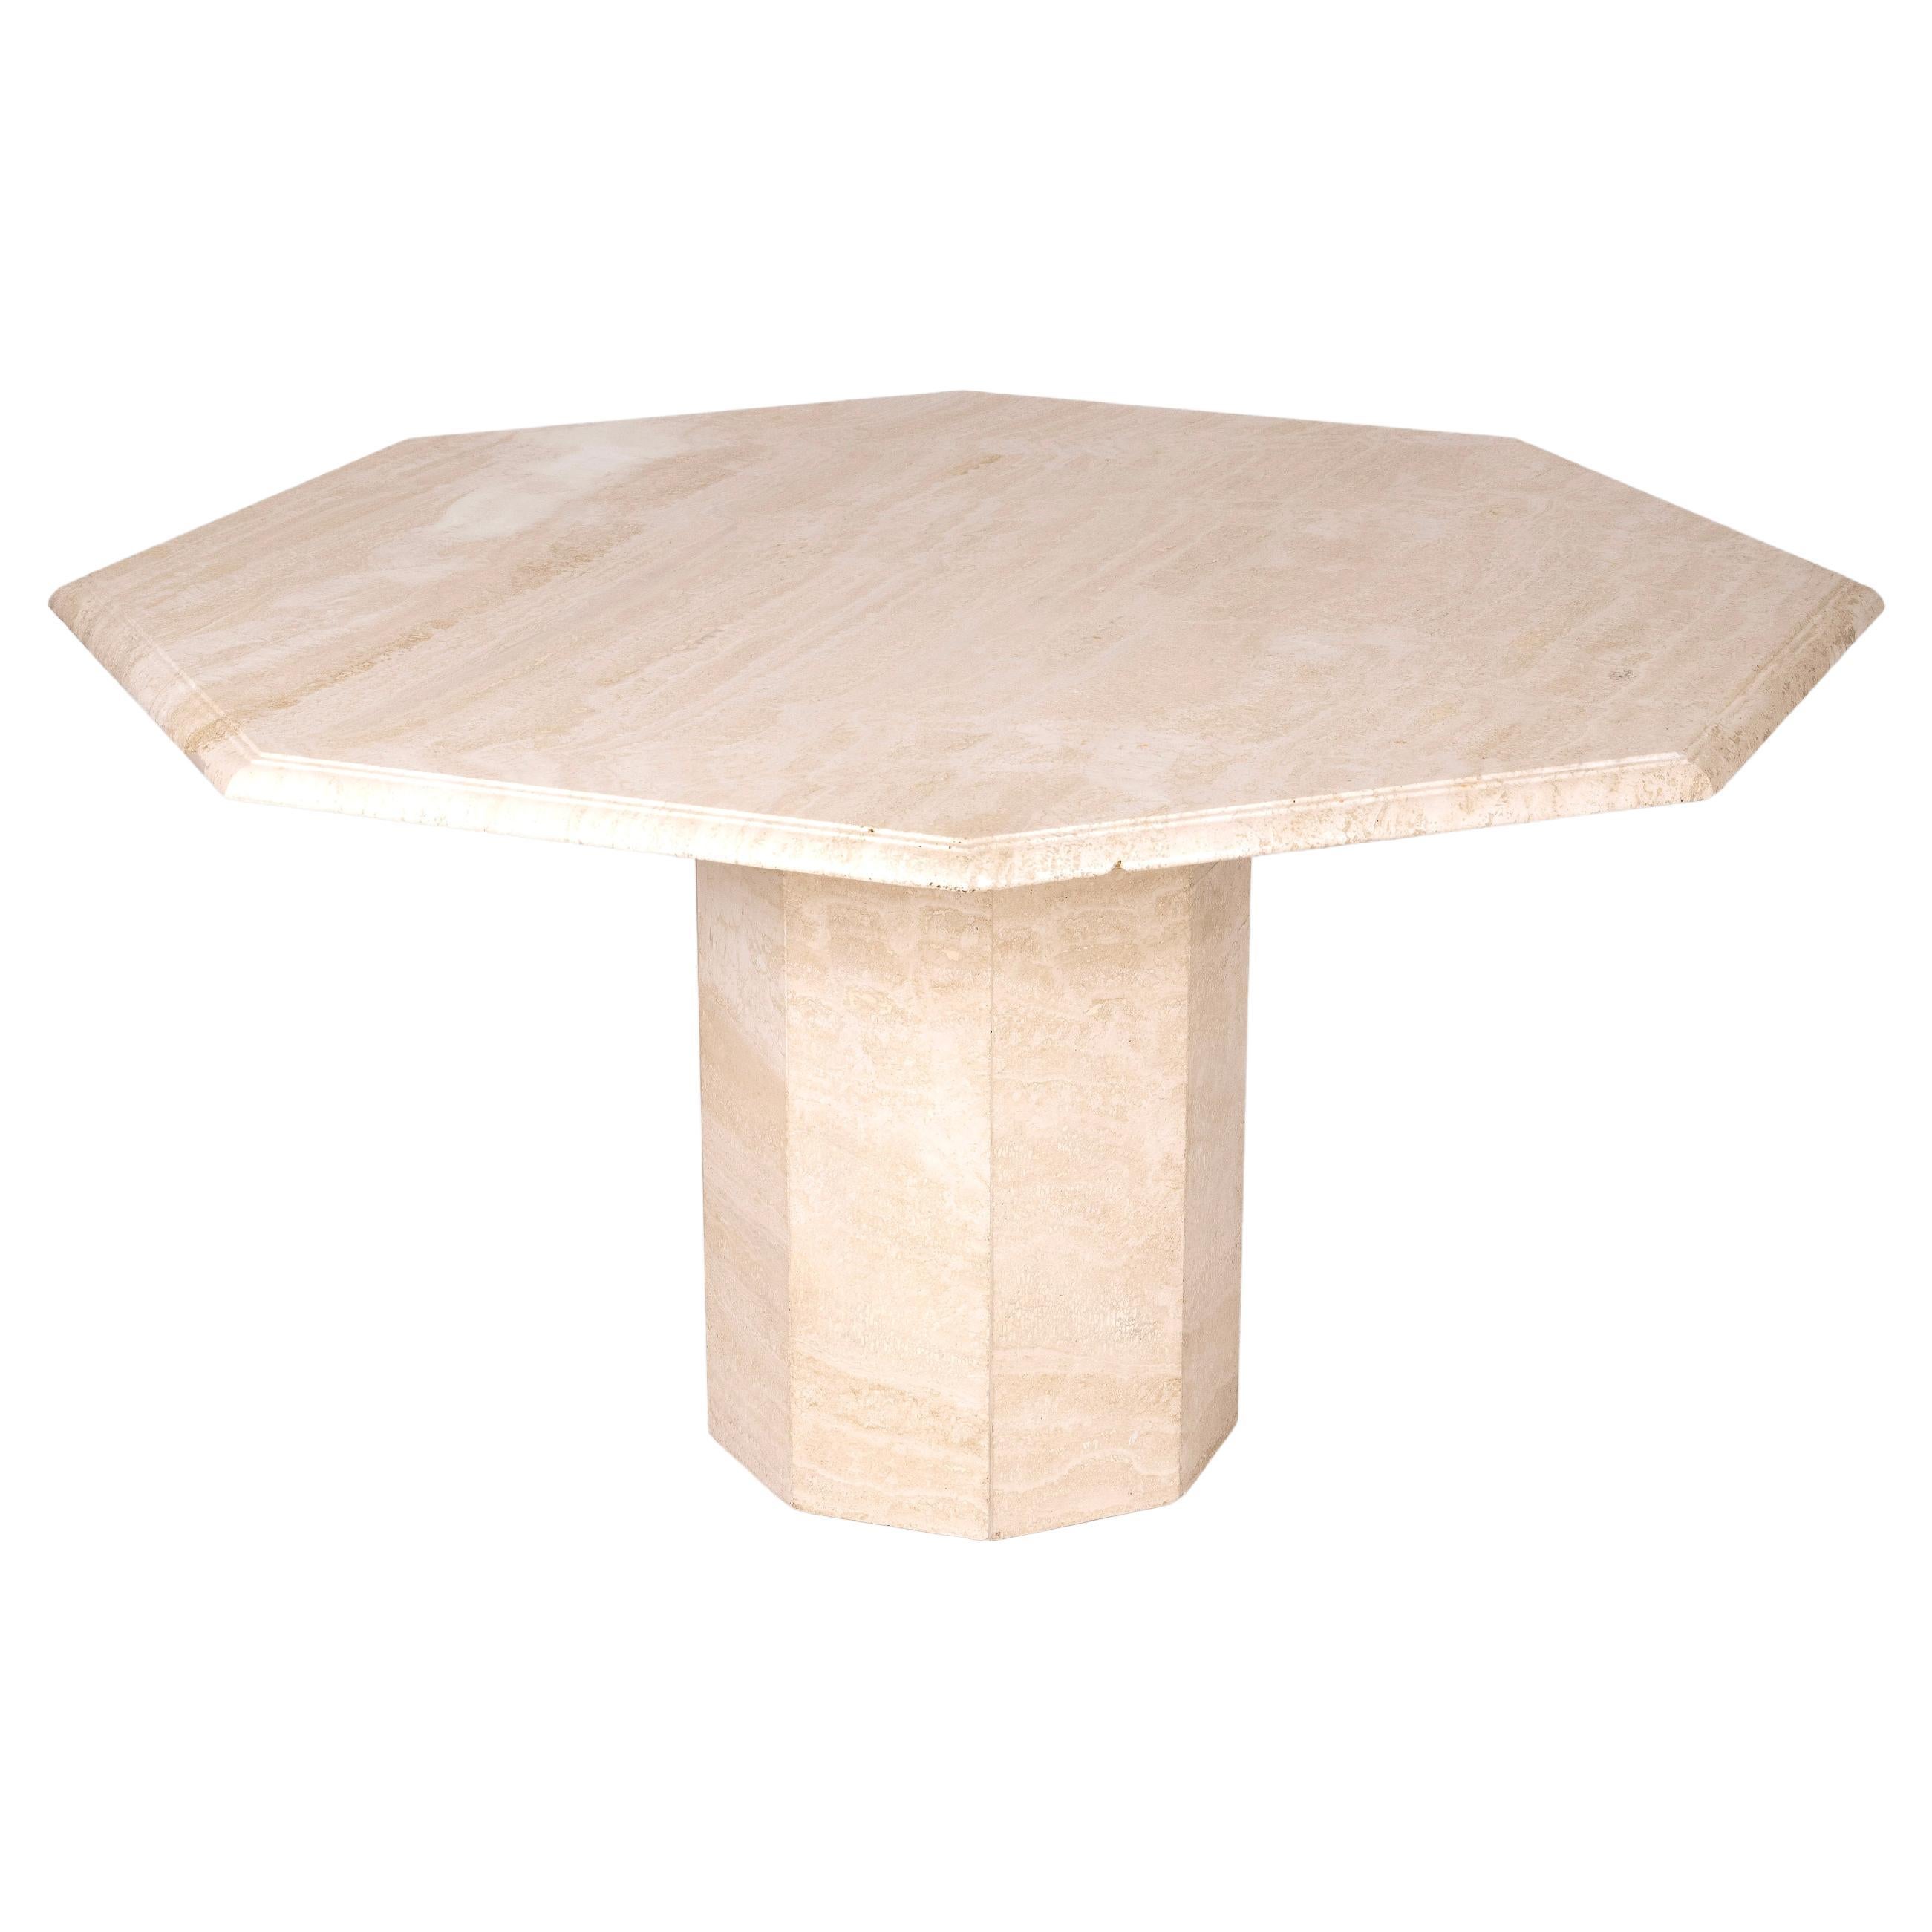 Octagonal travertine dining table.